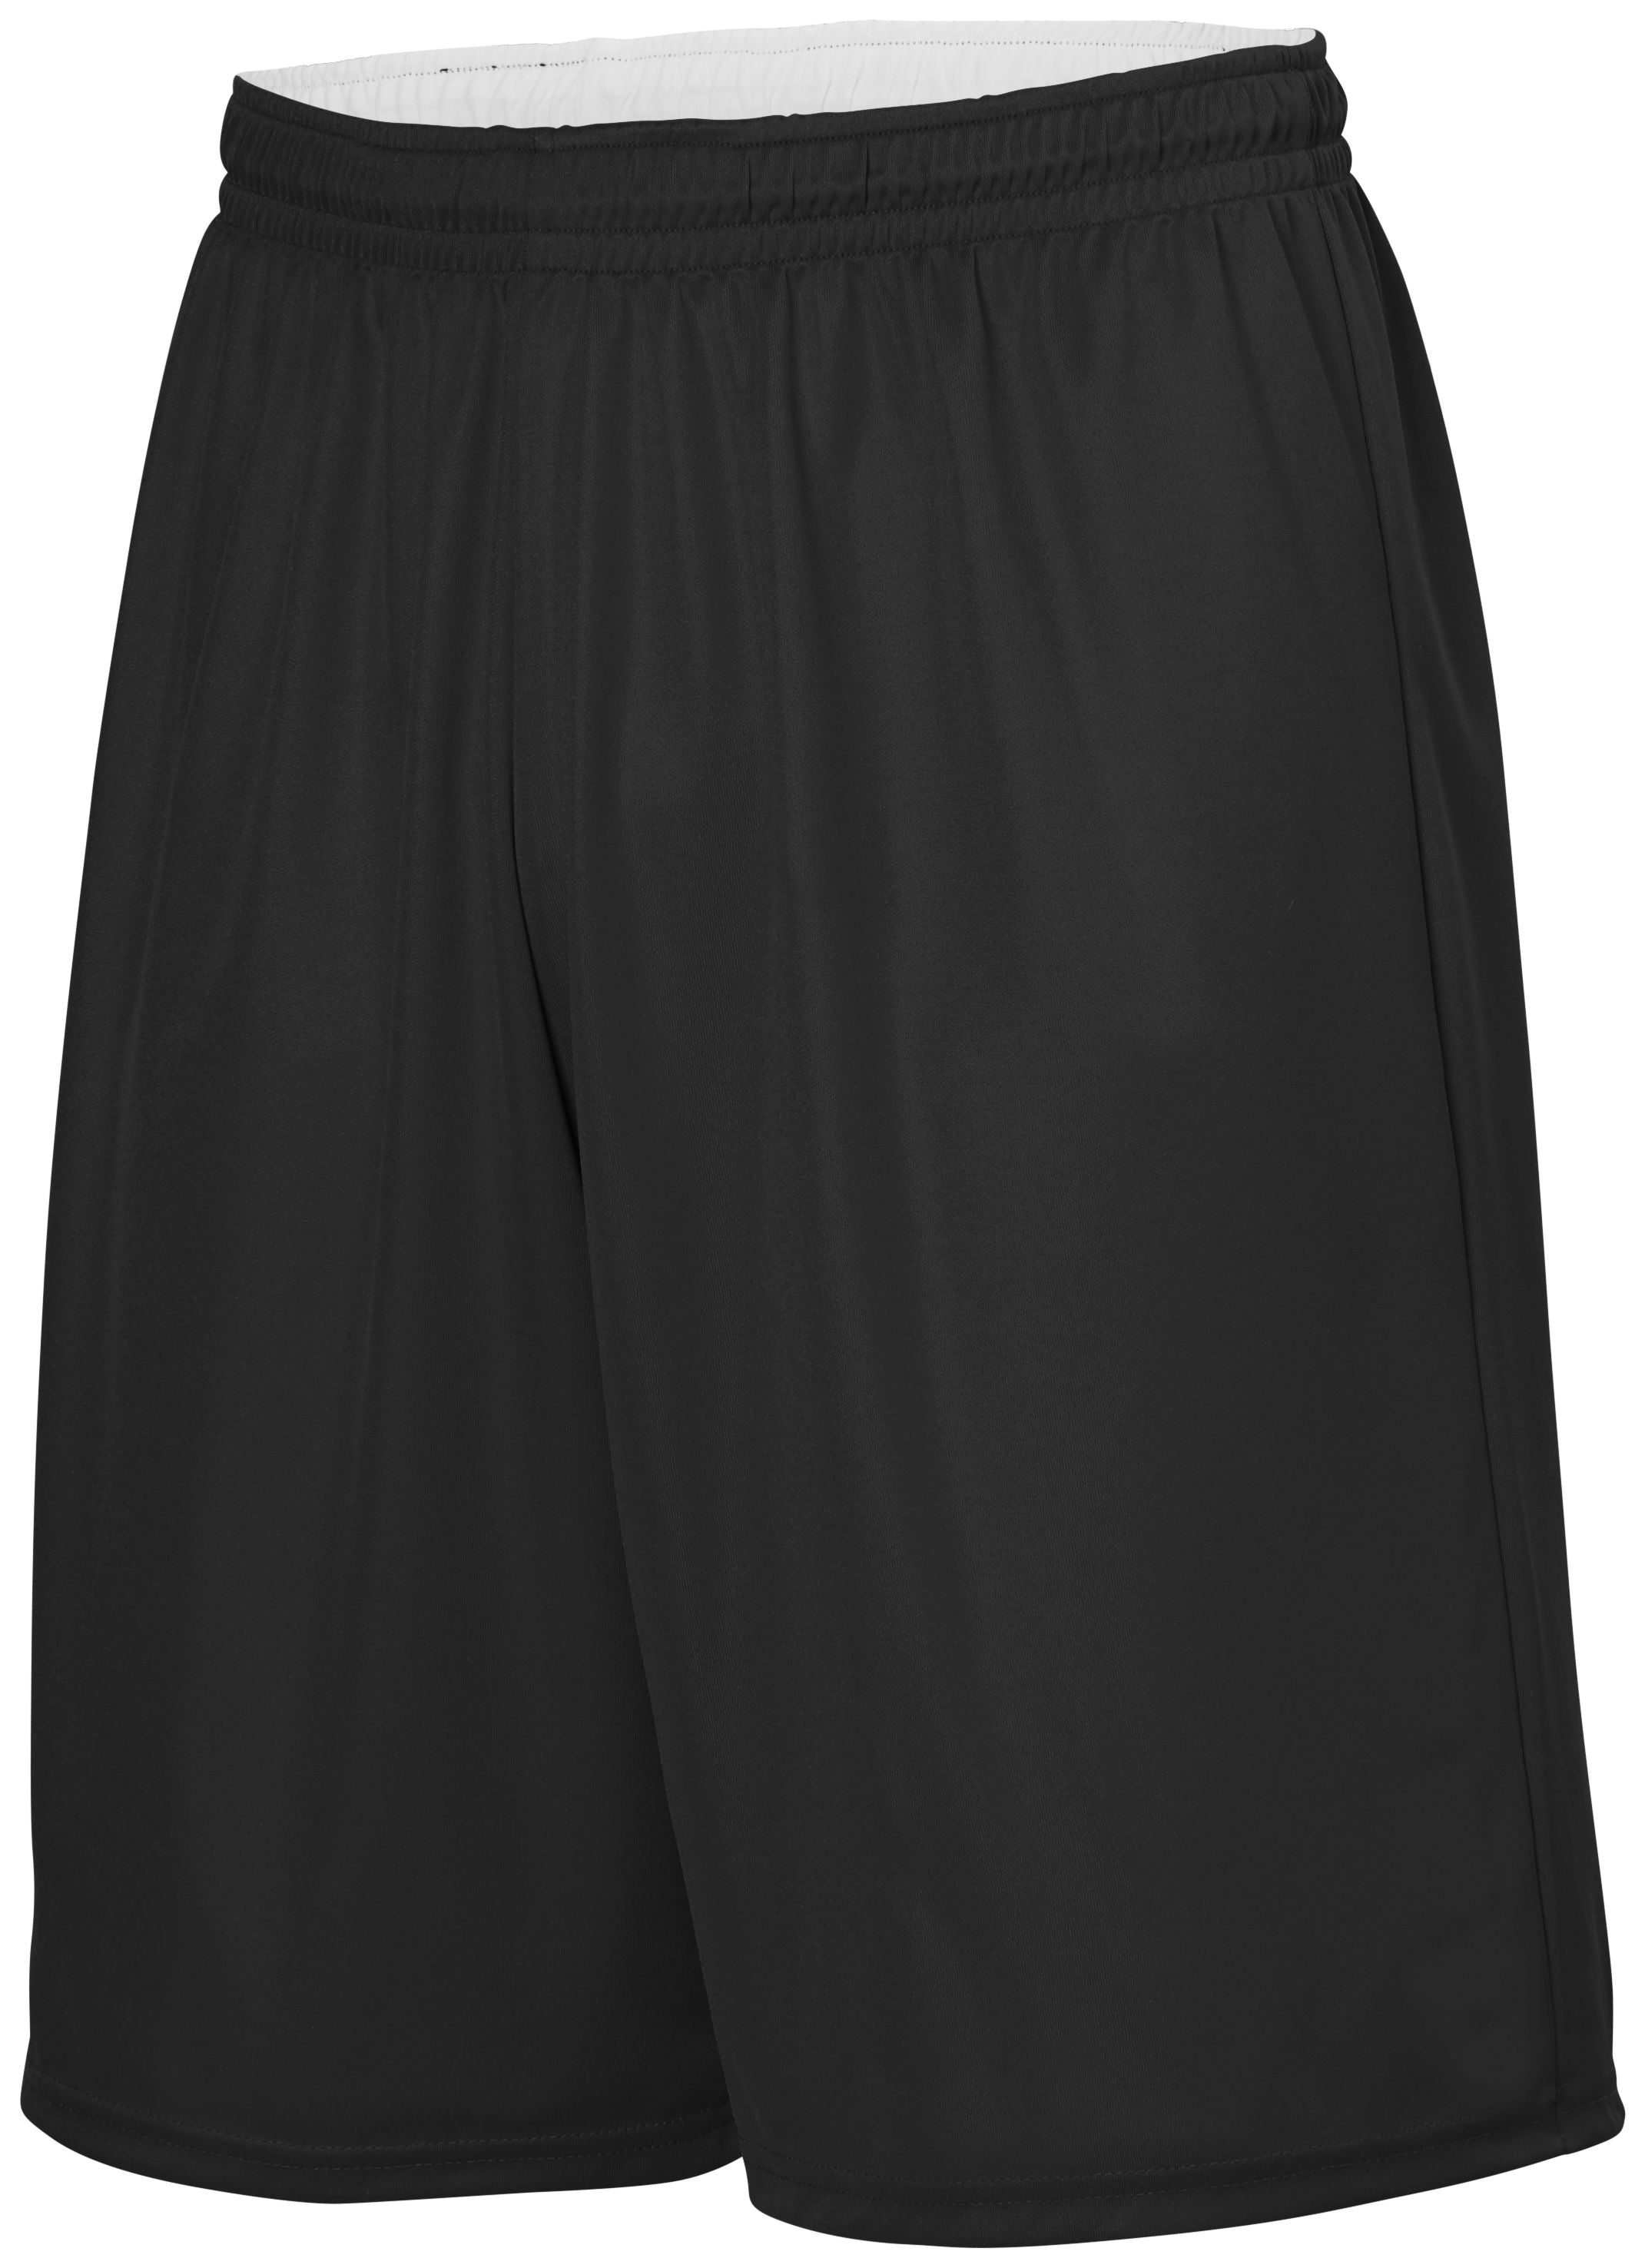 Augusta Sportswear Reversible Wicking Shorts